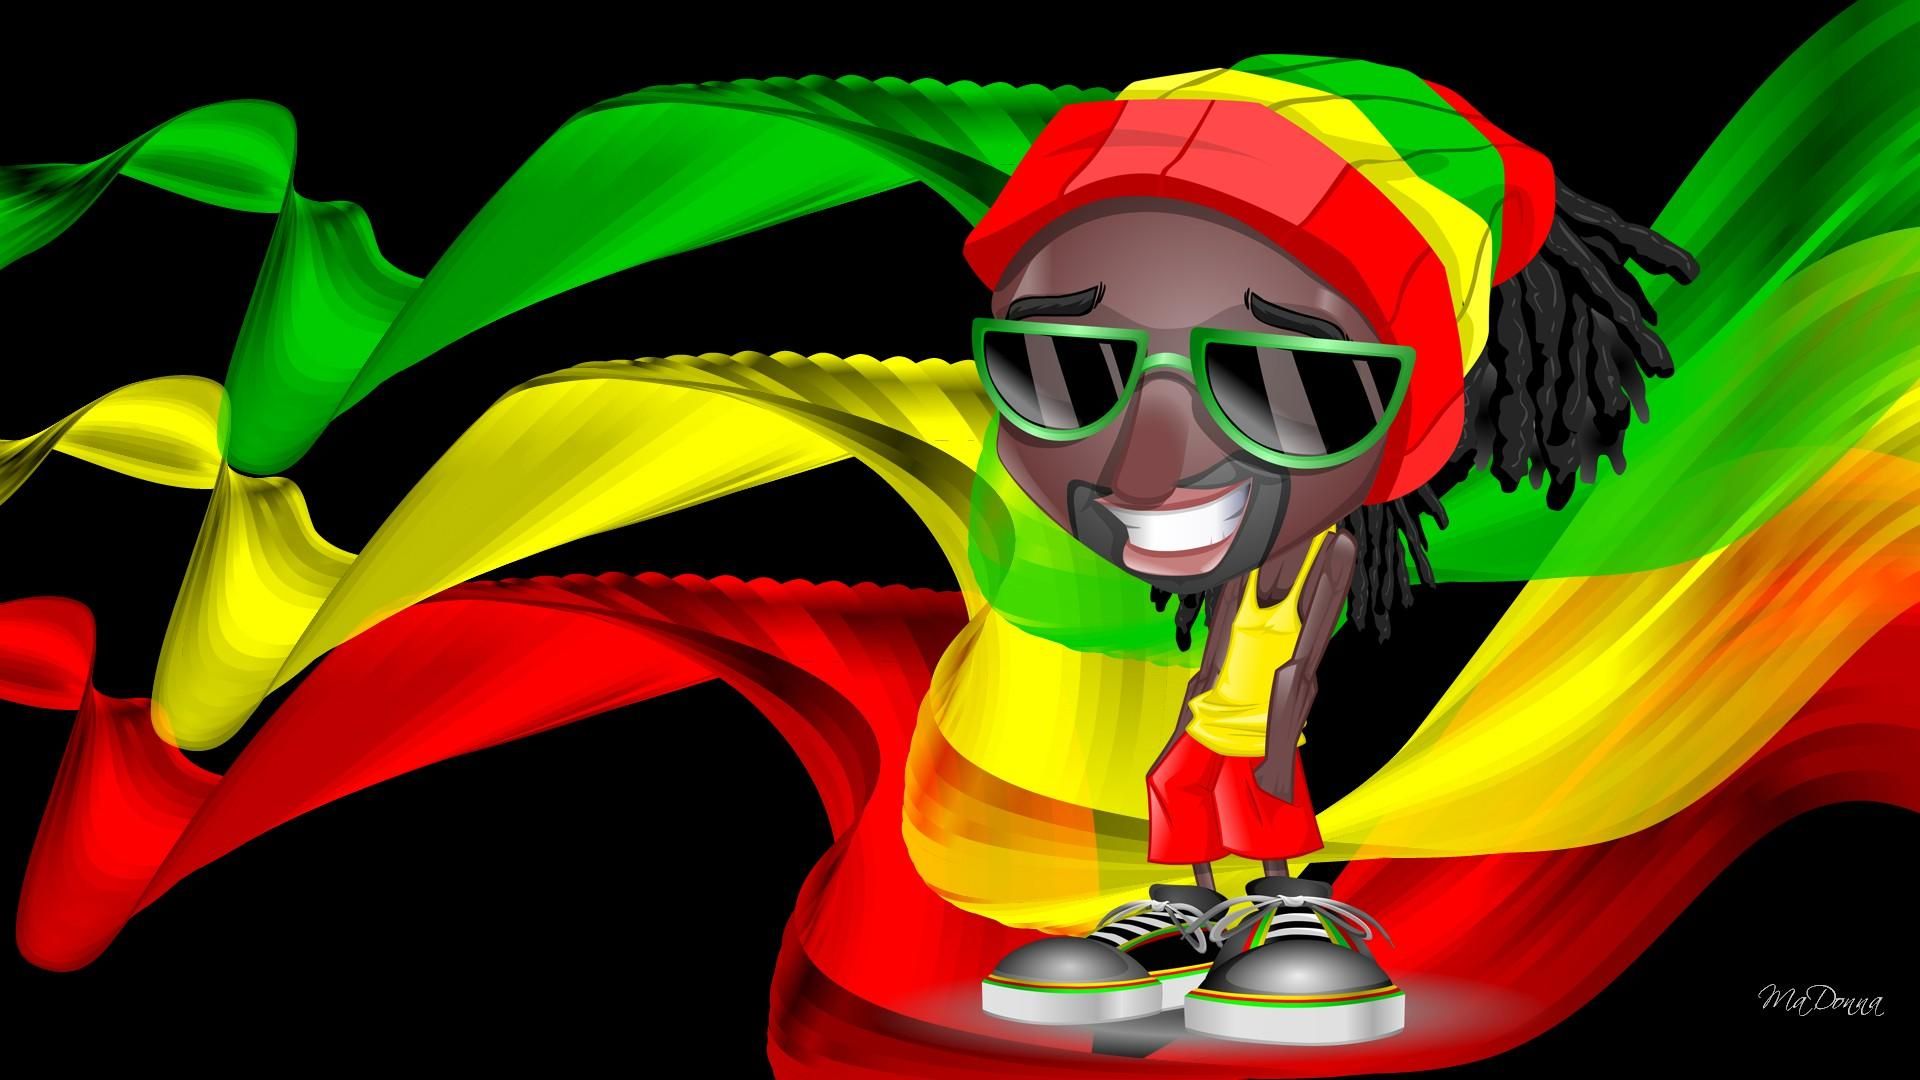 Rasta Reggae - HD Wallpaper 